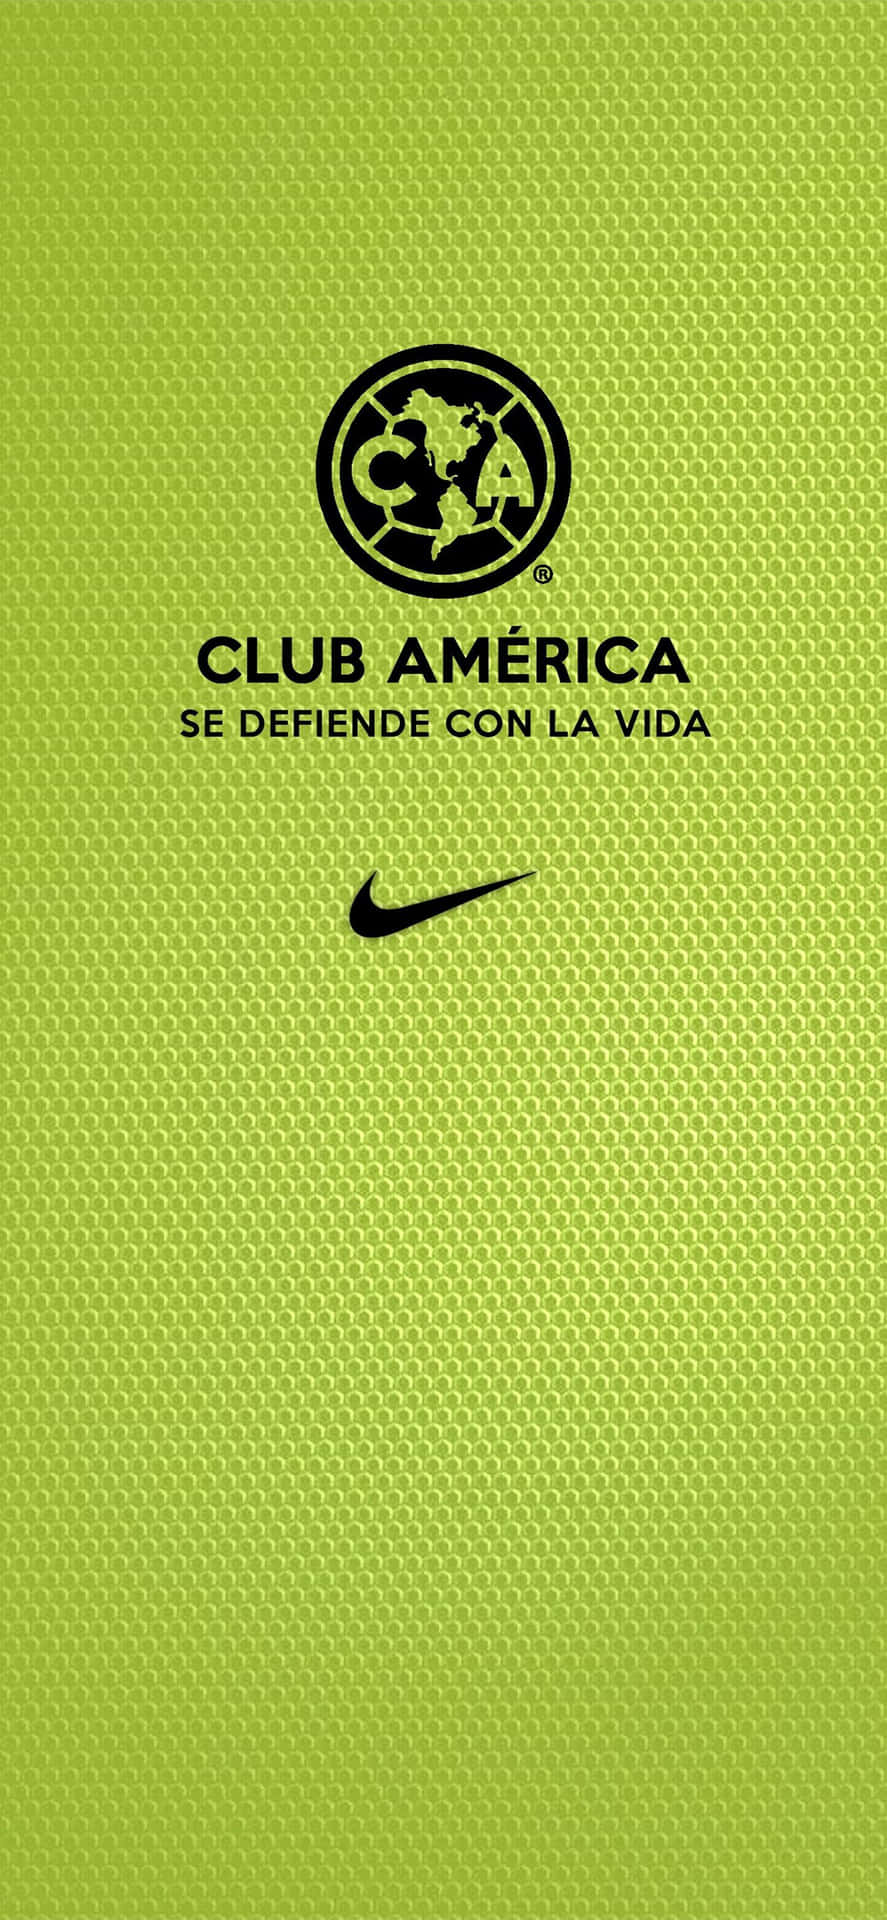 Club America Logo On A Green Background Wallpaper